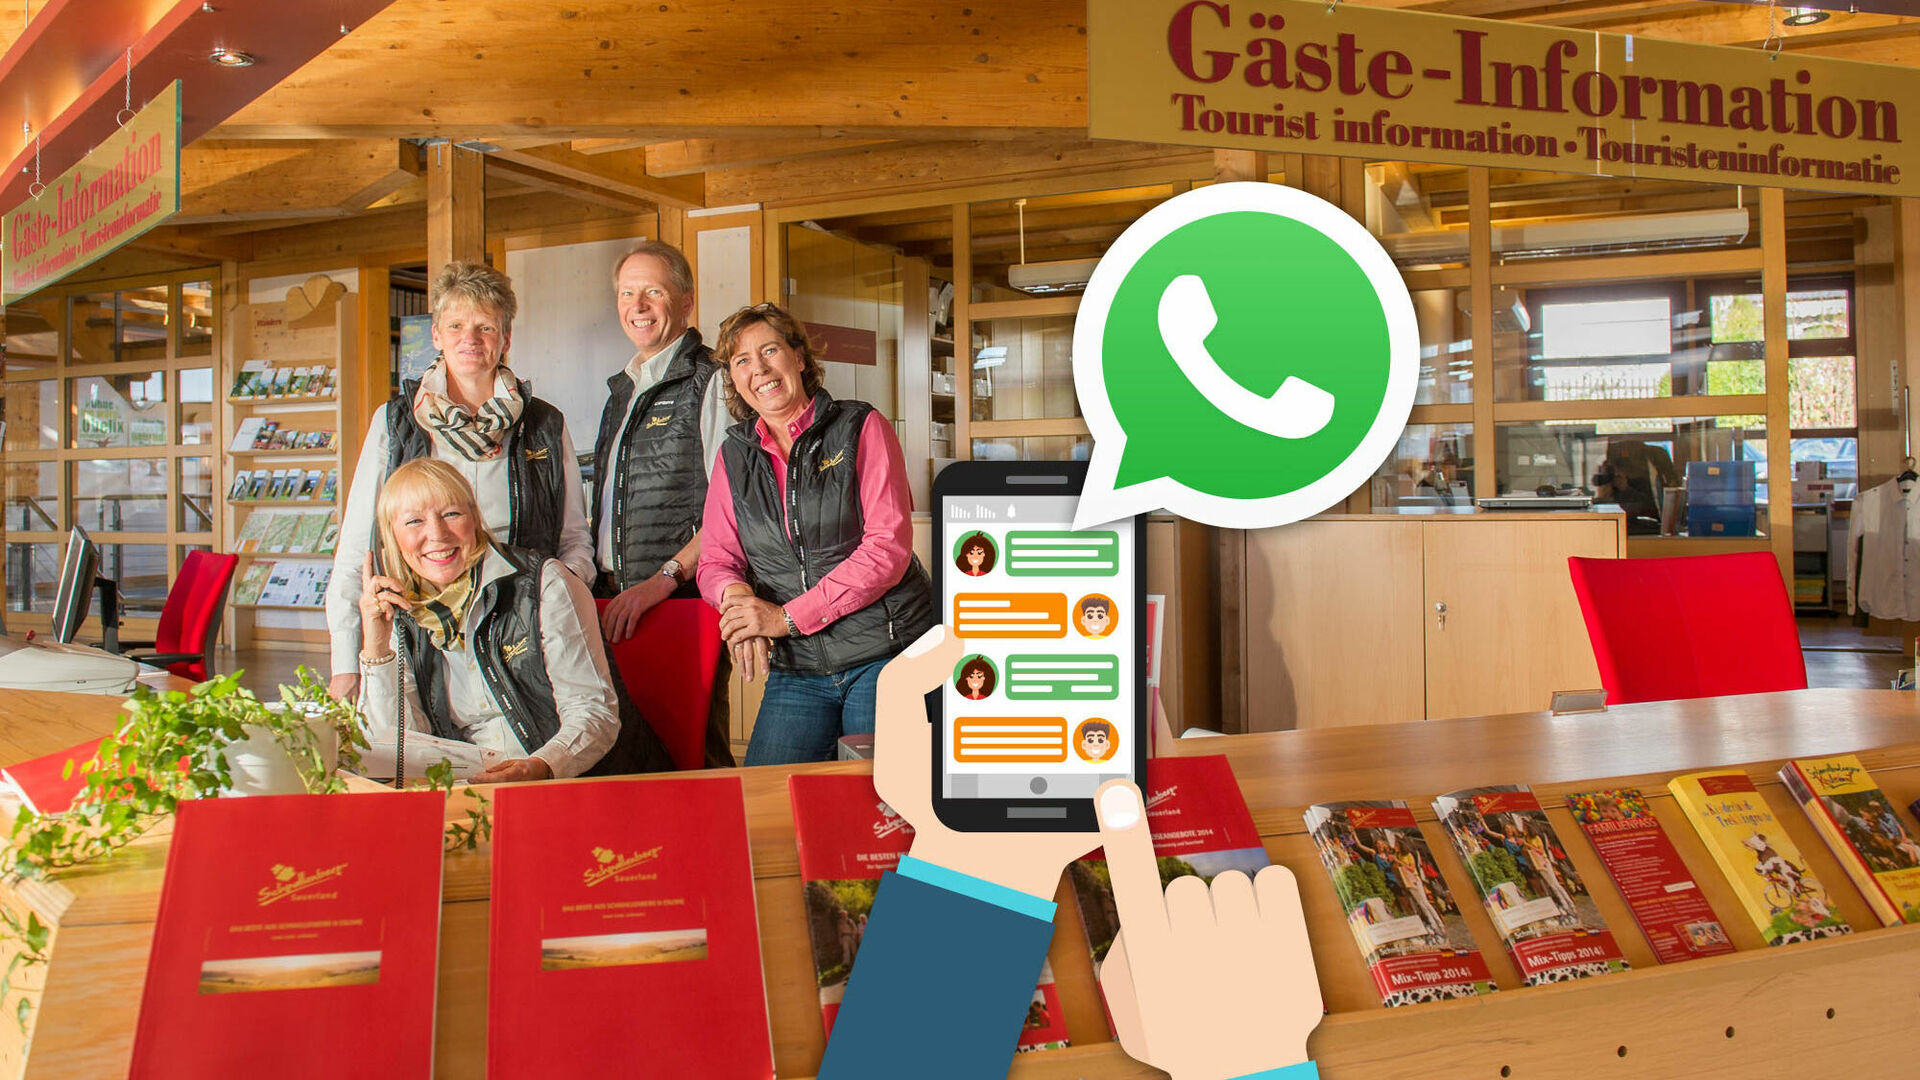 WhatsApp service of the guest information in Schmallenberg